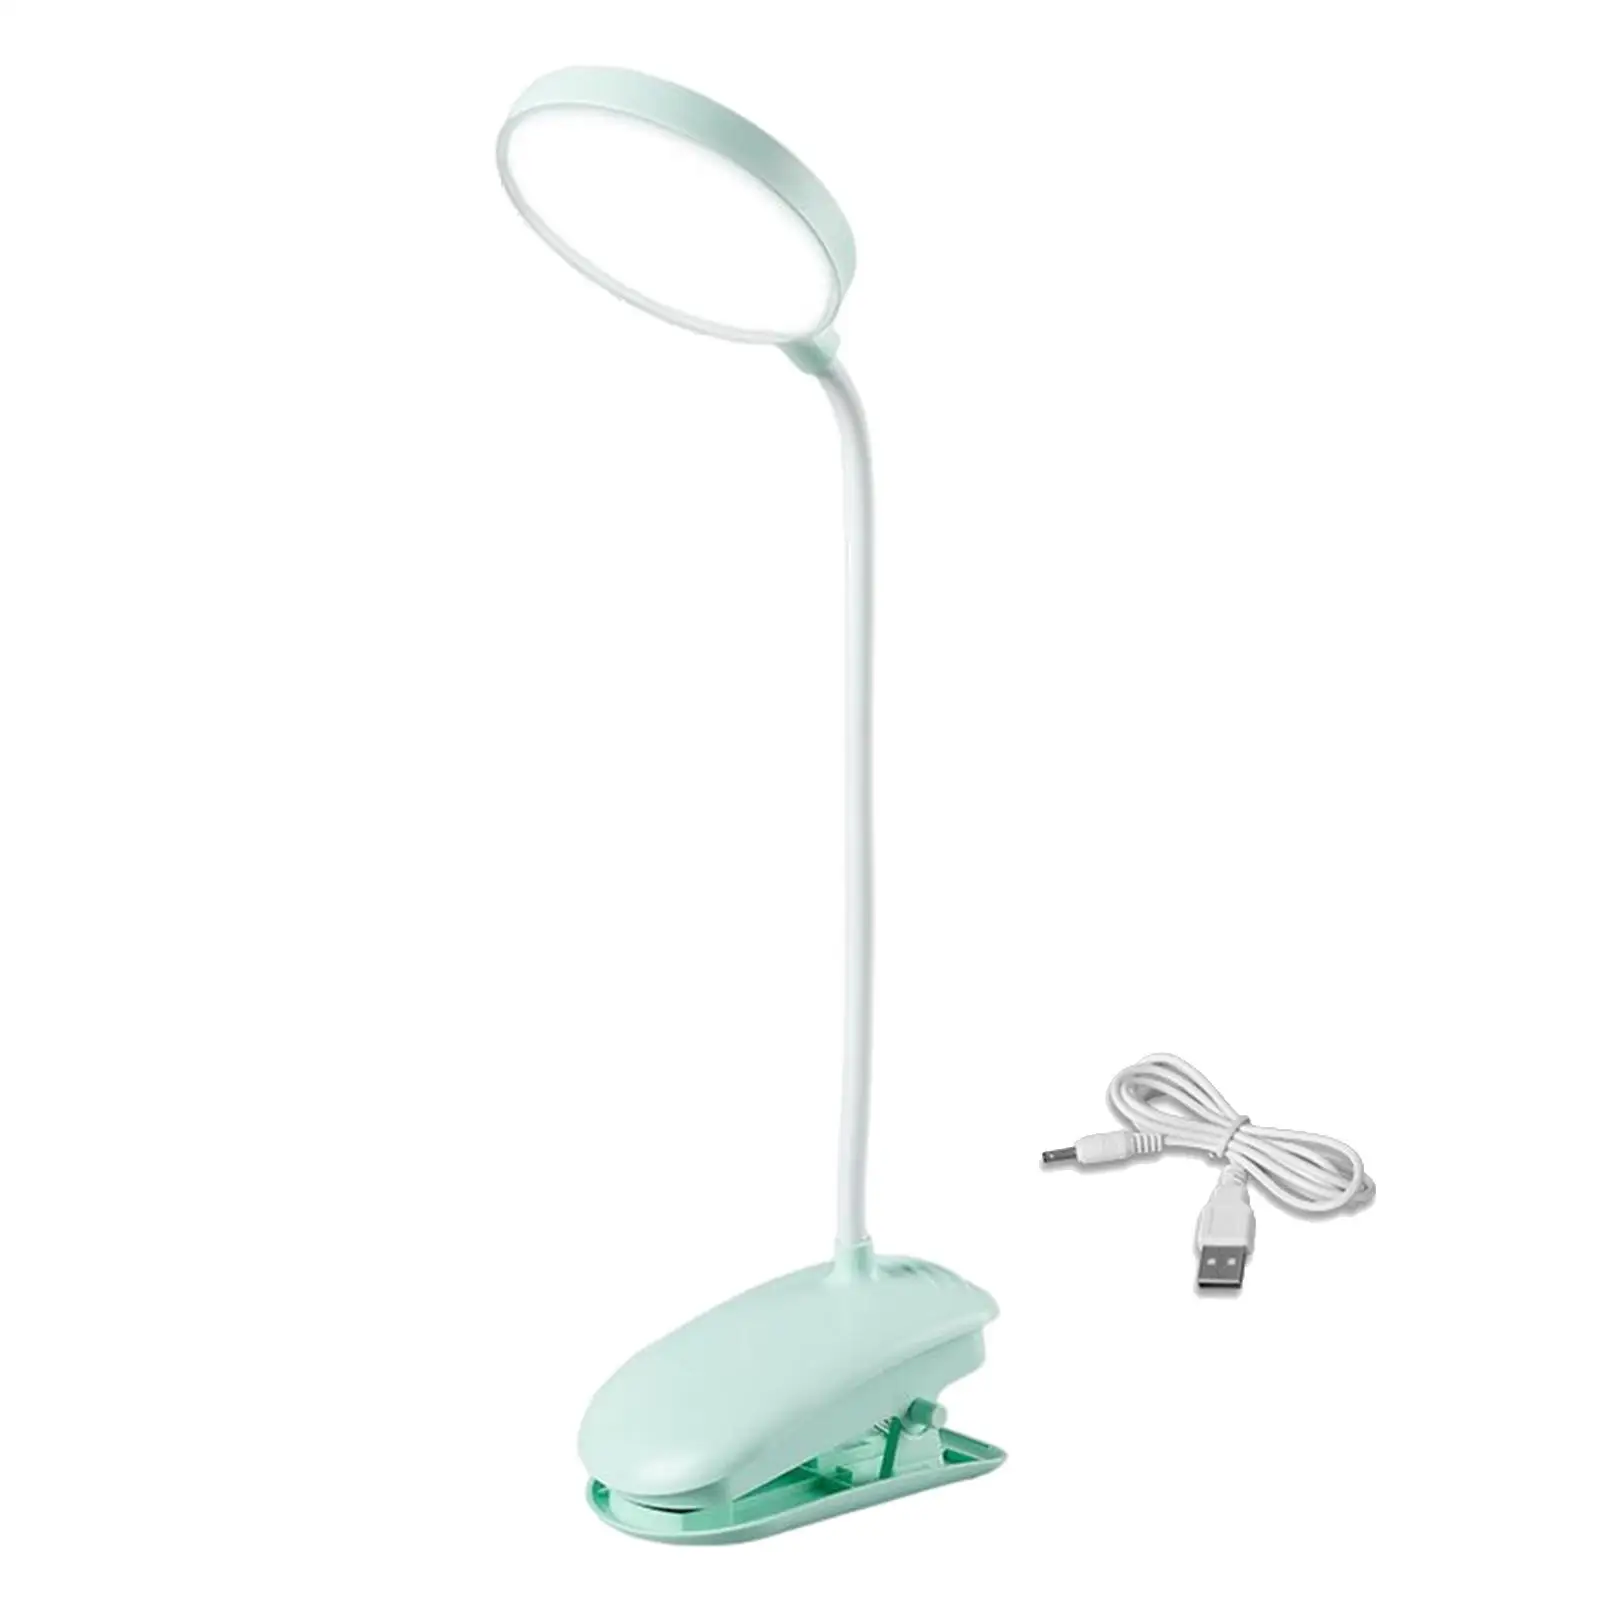 LED Desk Light Table Lamp Clip On Dimming Rechargeable Eye Protection Flexible Adjustable Clamp Light for Bedside Bedroom Dorm